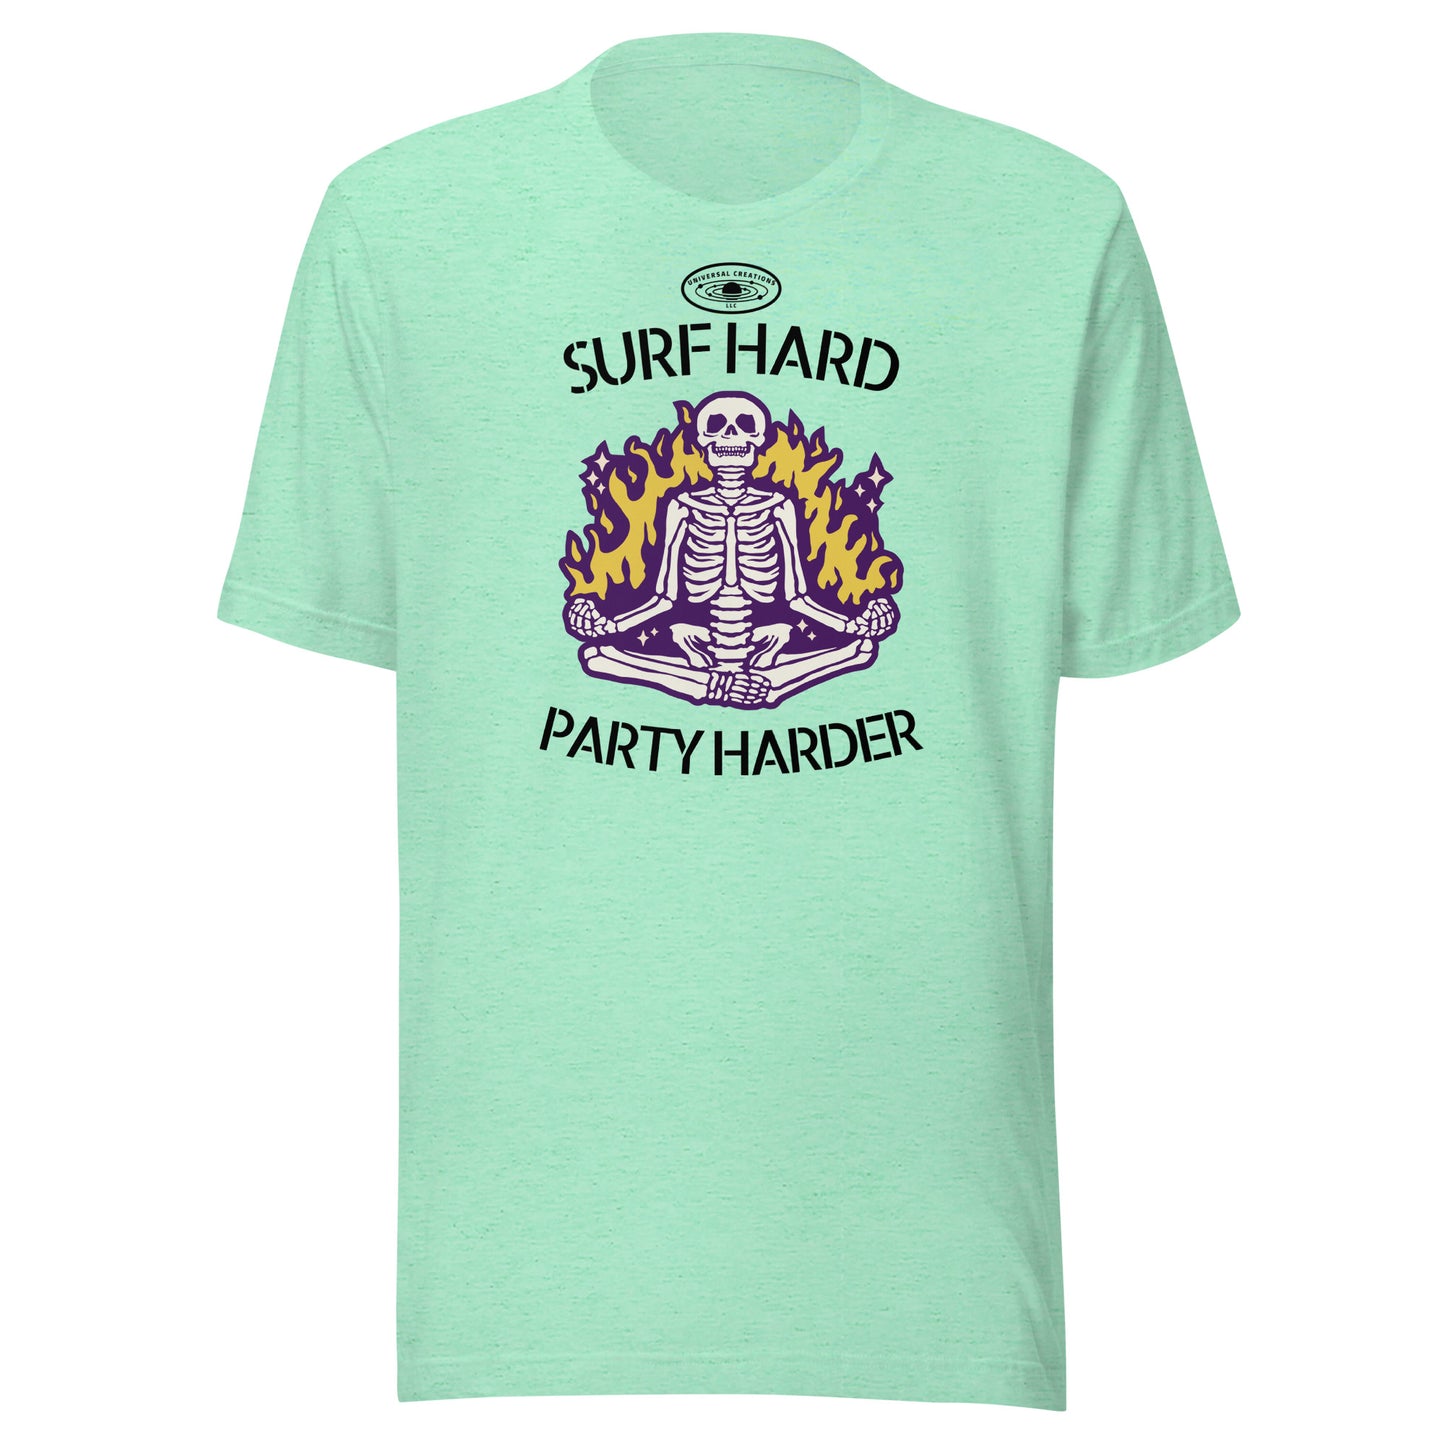 Surf Hard Party Harder t-shirt